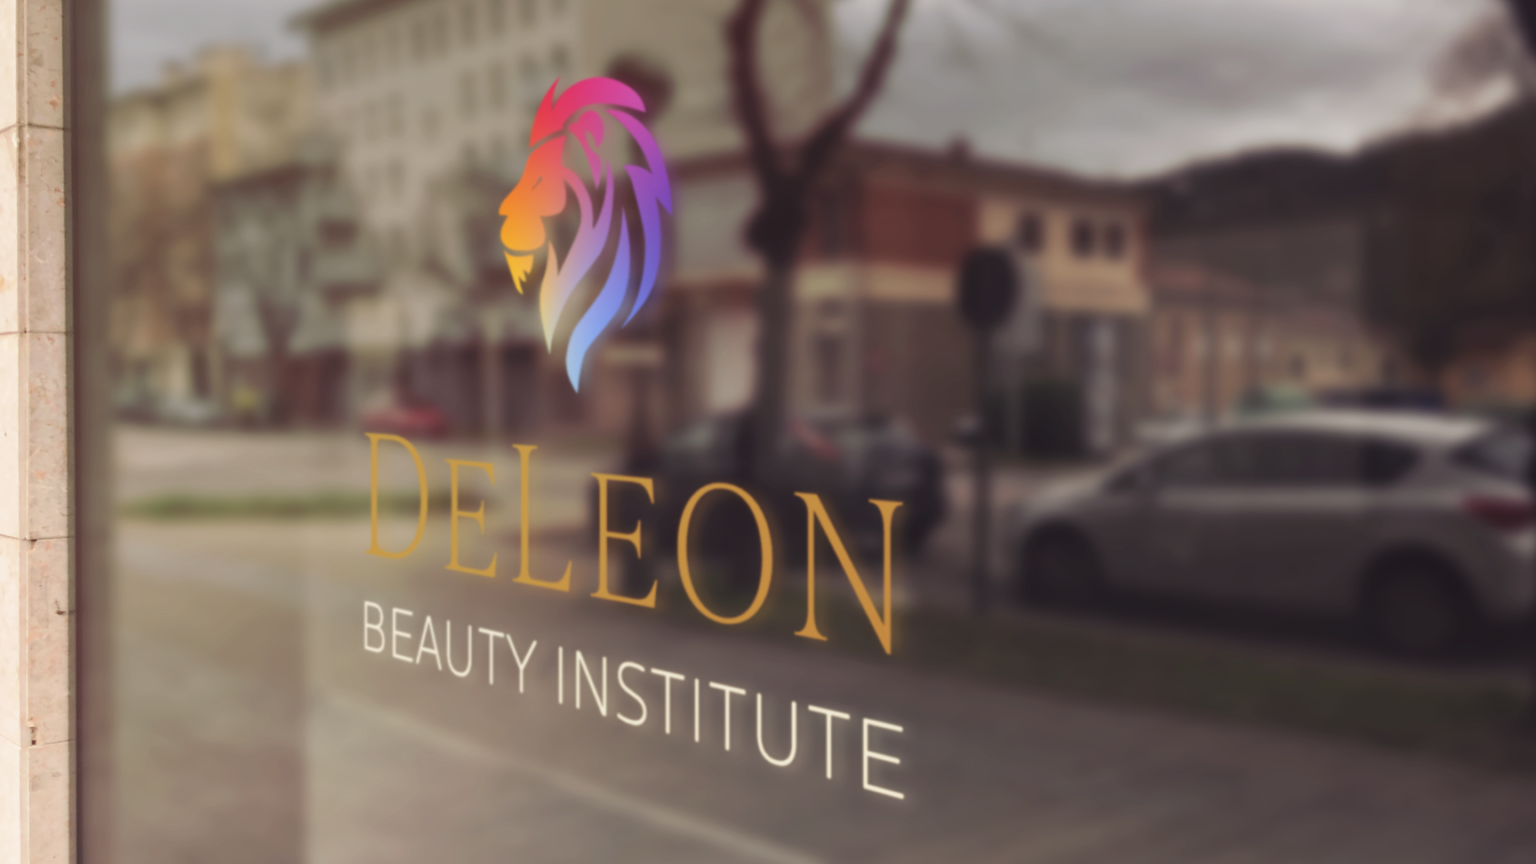 Window Decal Mockup for DeLeon Beauty Institute